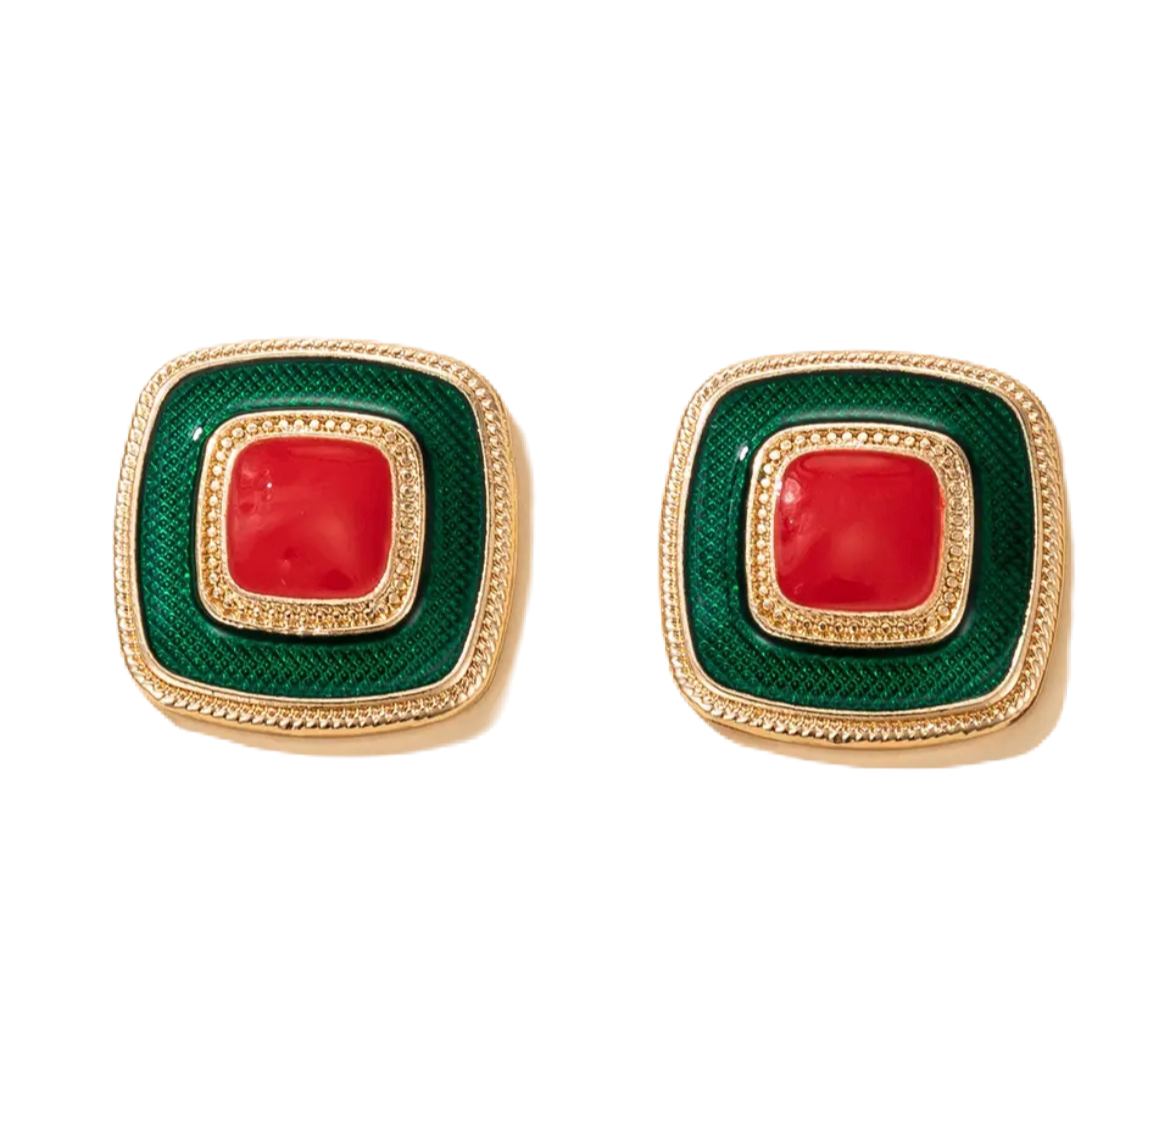 Square green earrings